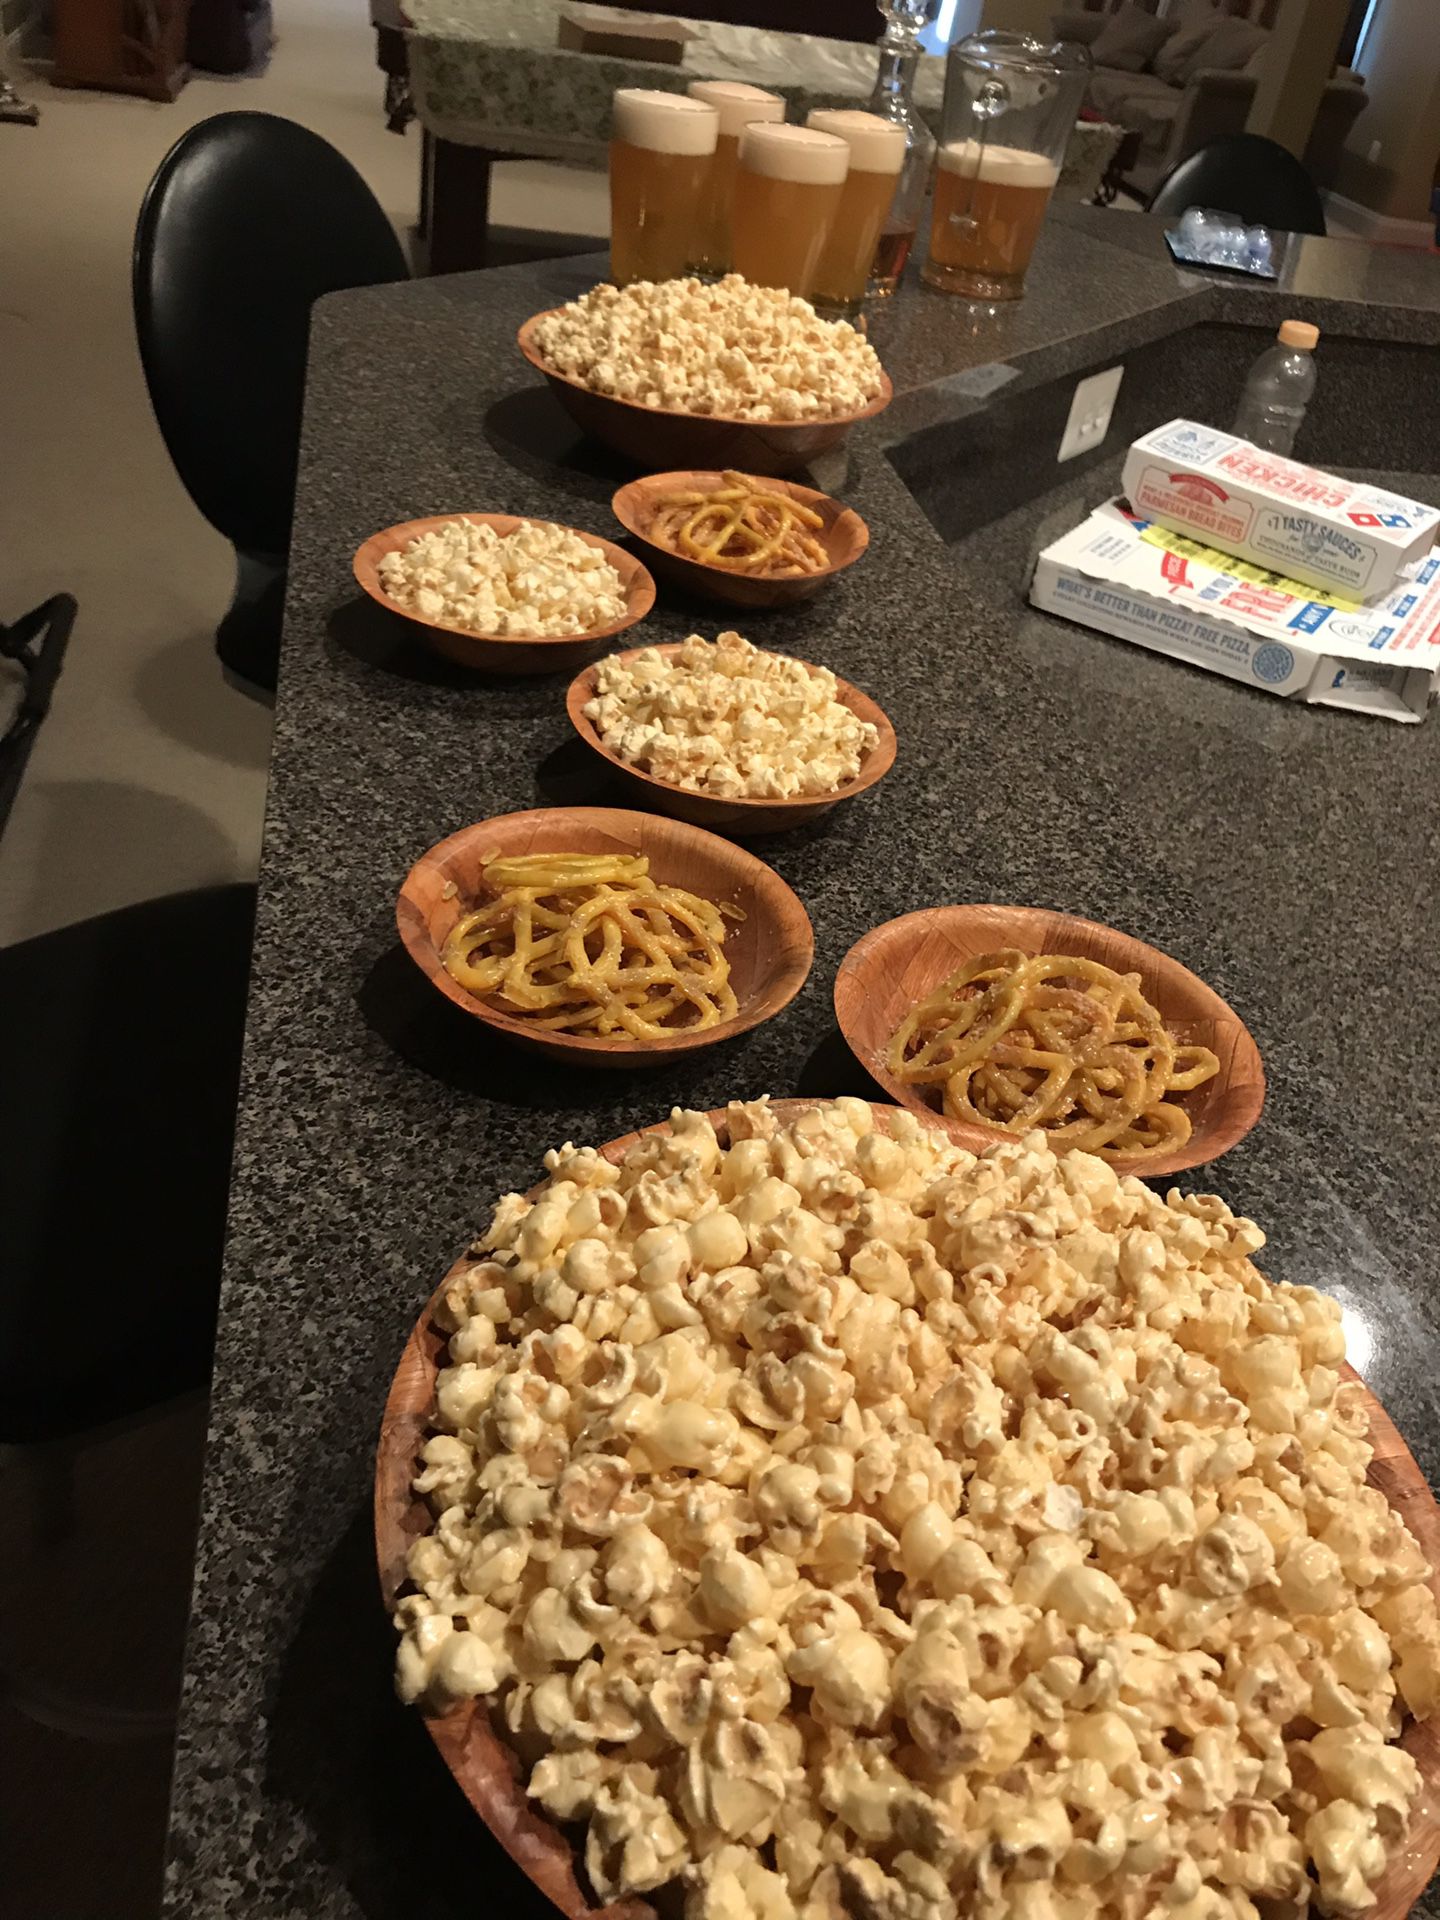 Decorative popcorn and pretzels and alcohol